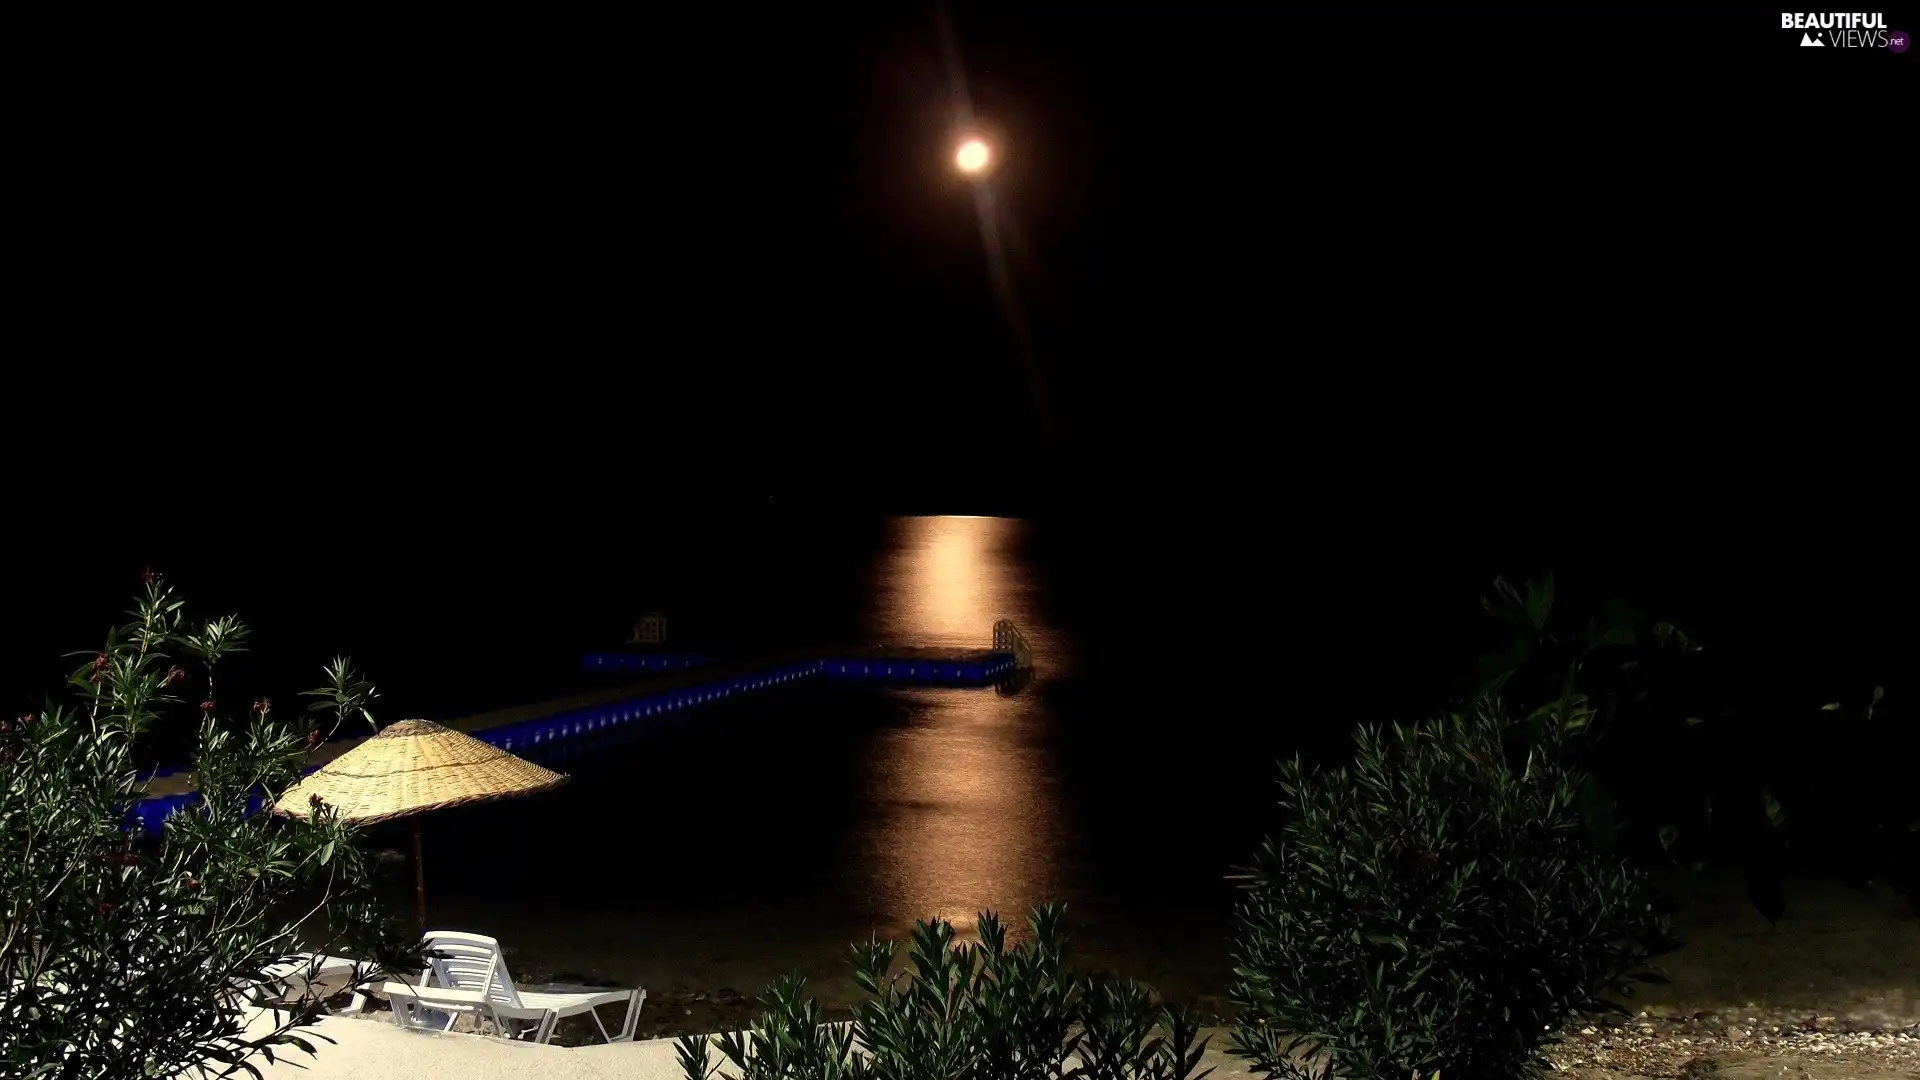 Night, lake, deck chair, Bush, pier, moon